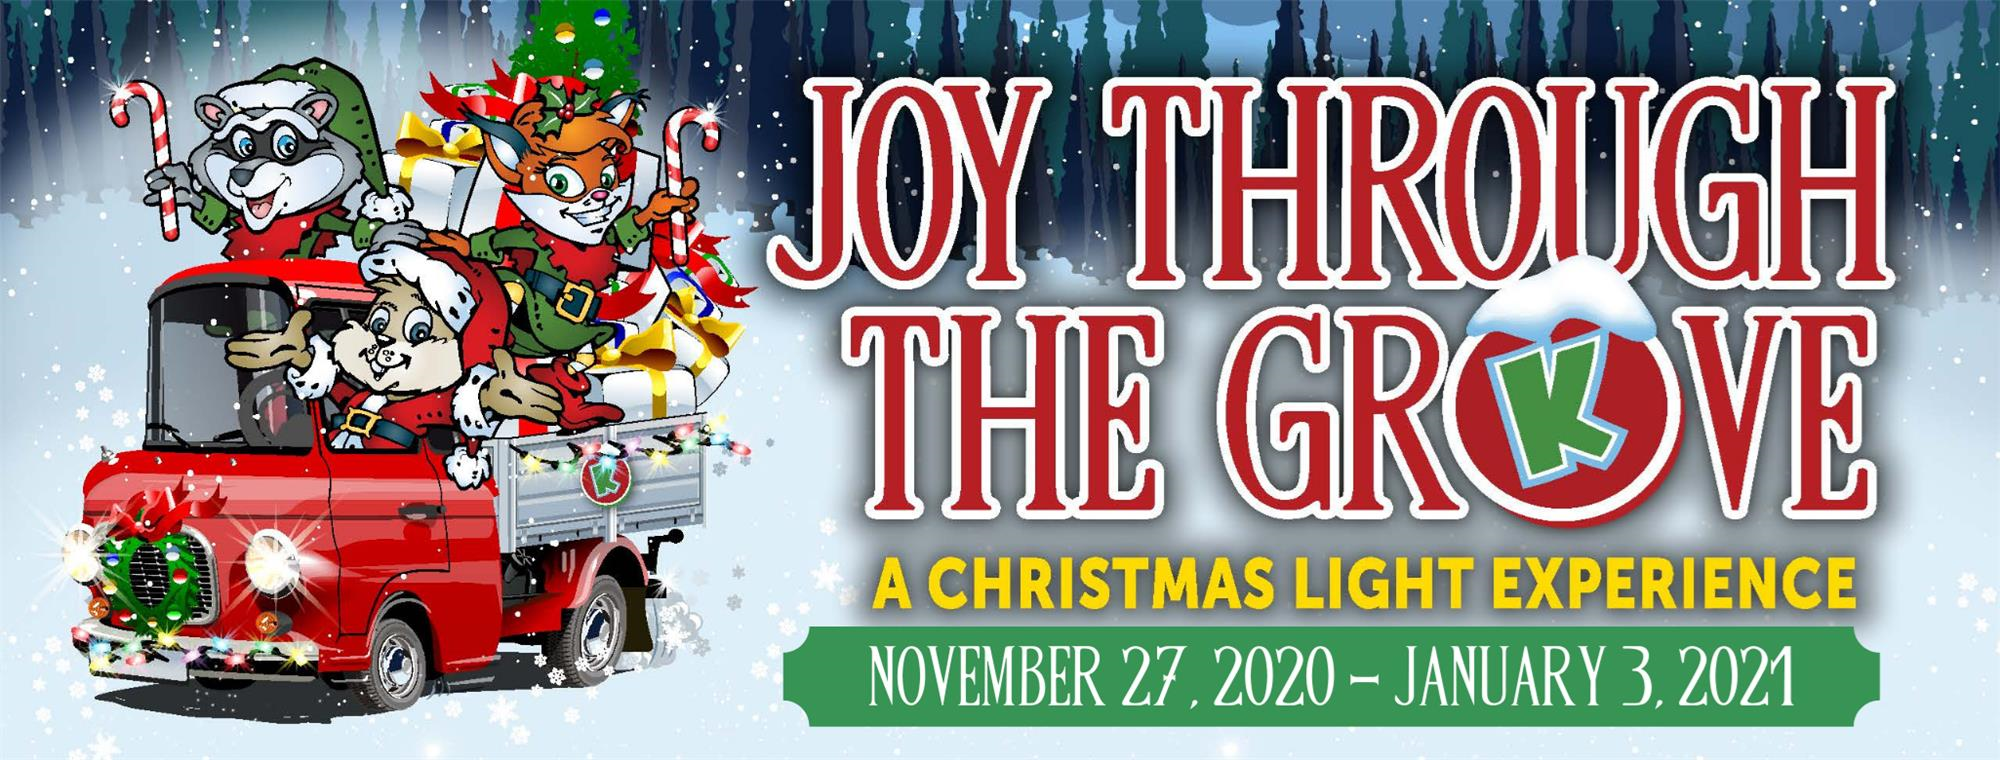 Knoebels Announces “Joy Through the Grove” A Christmas Light